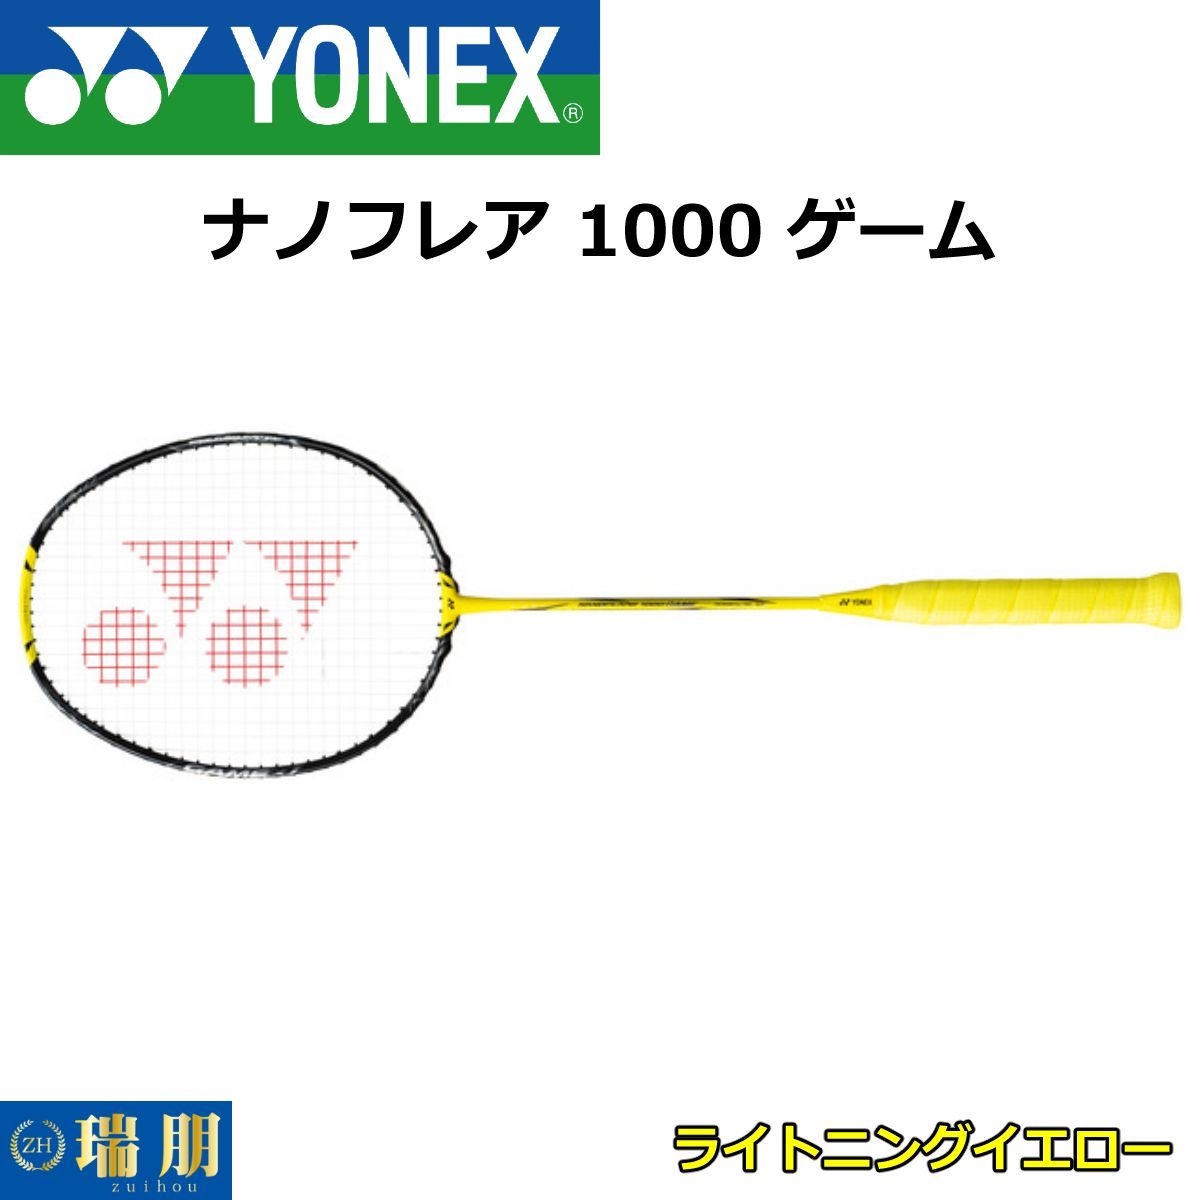 YONEX ヨネックス バドミントンラケット ナノフレア 1000 ゲーム - 瑞